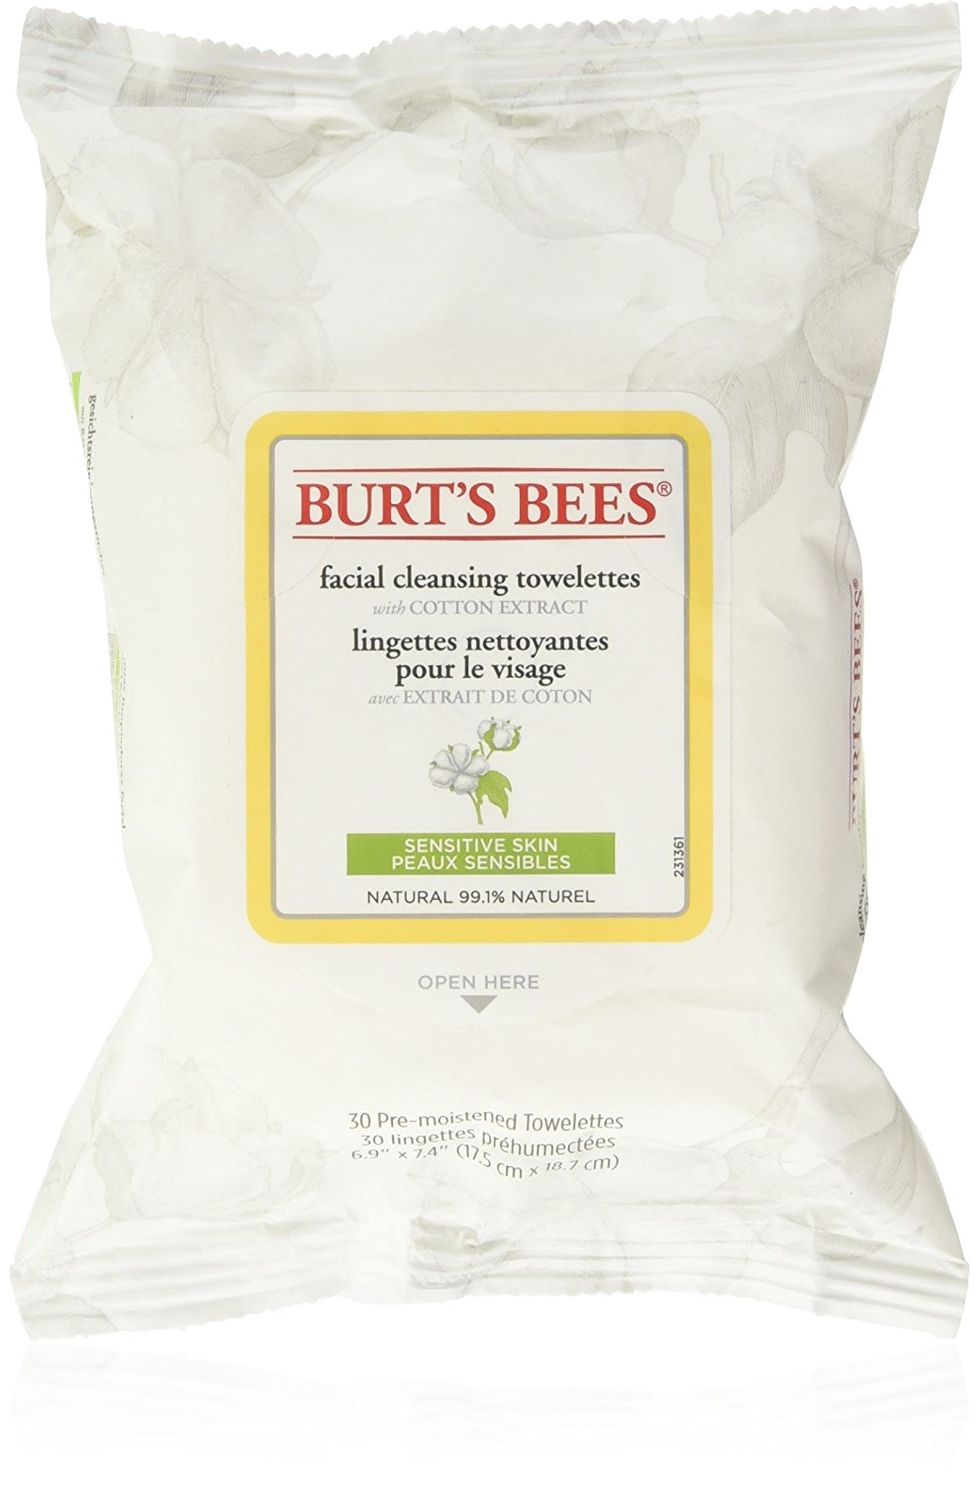 Best face wipes - Burt's Bees